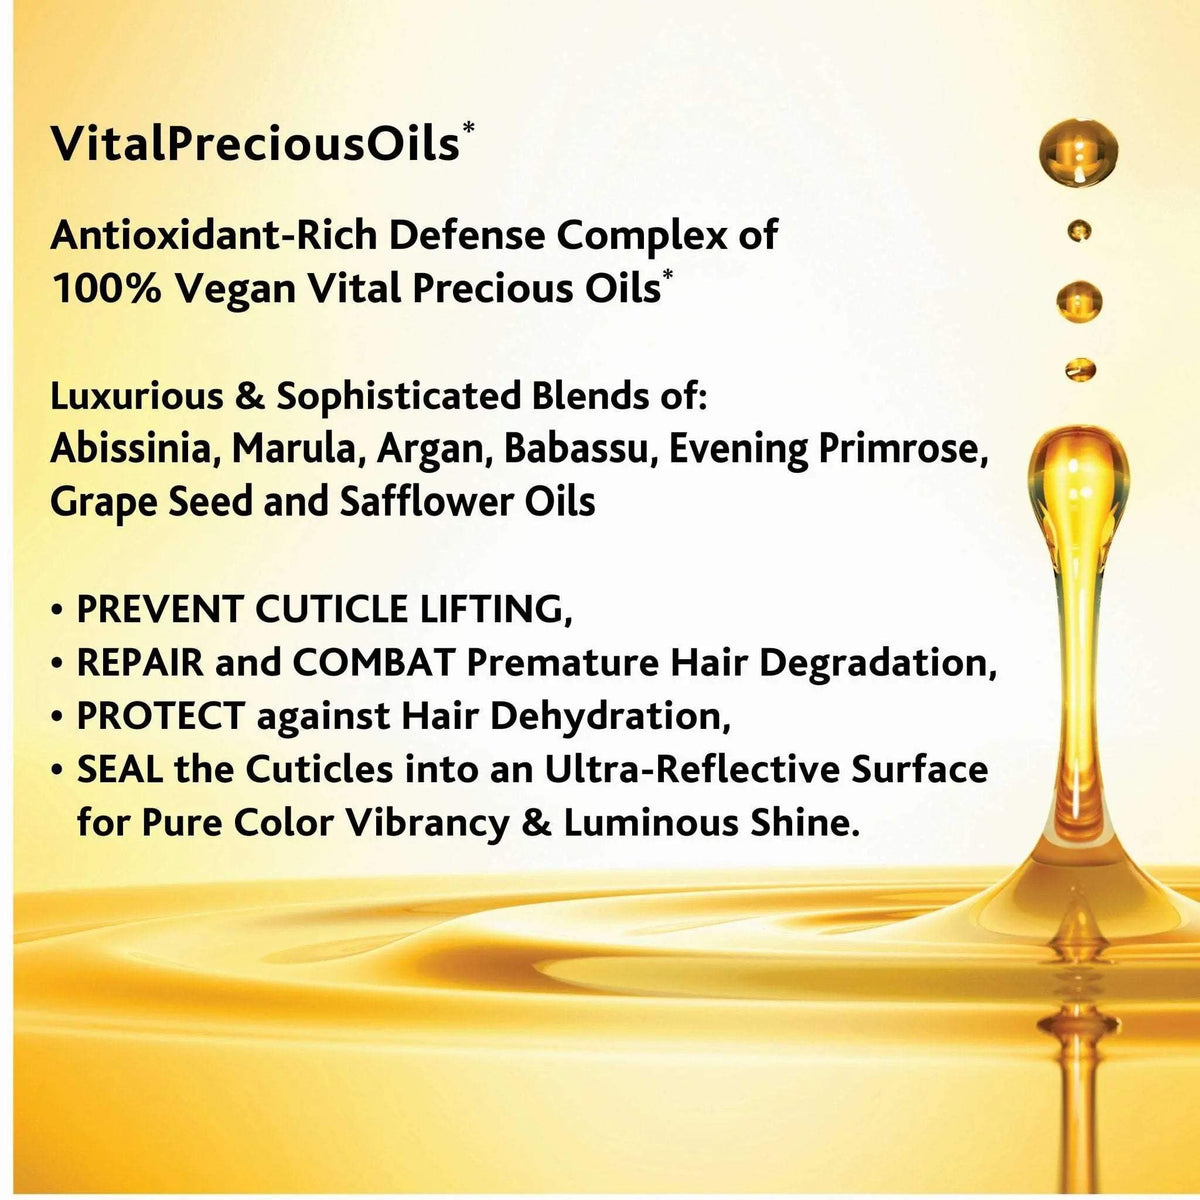 PROCURE Colour Protect Defense Hair Oil - 90 Capsules - SNOBGIRLS.com